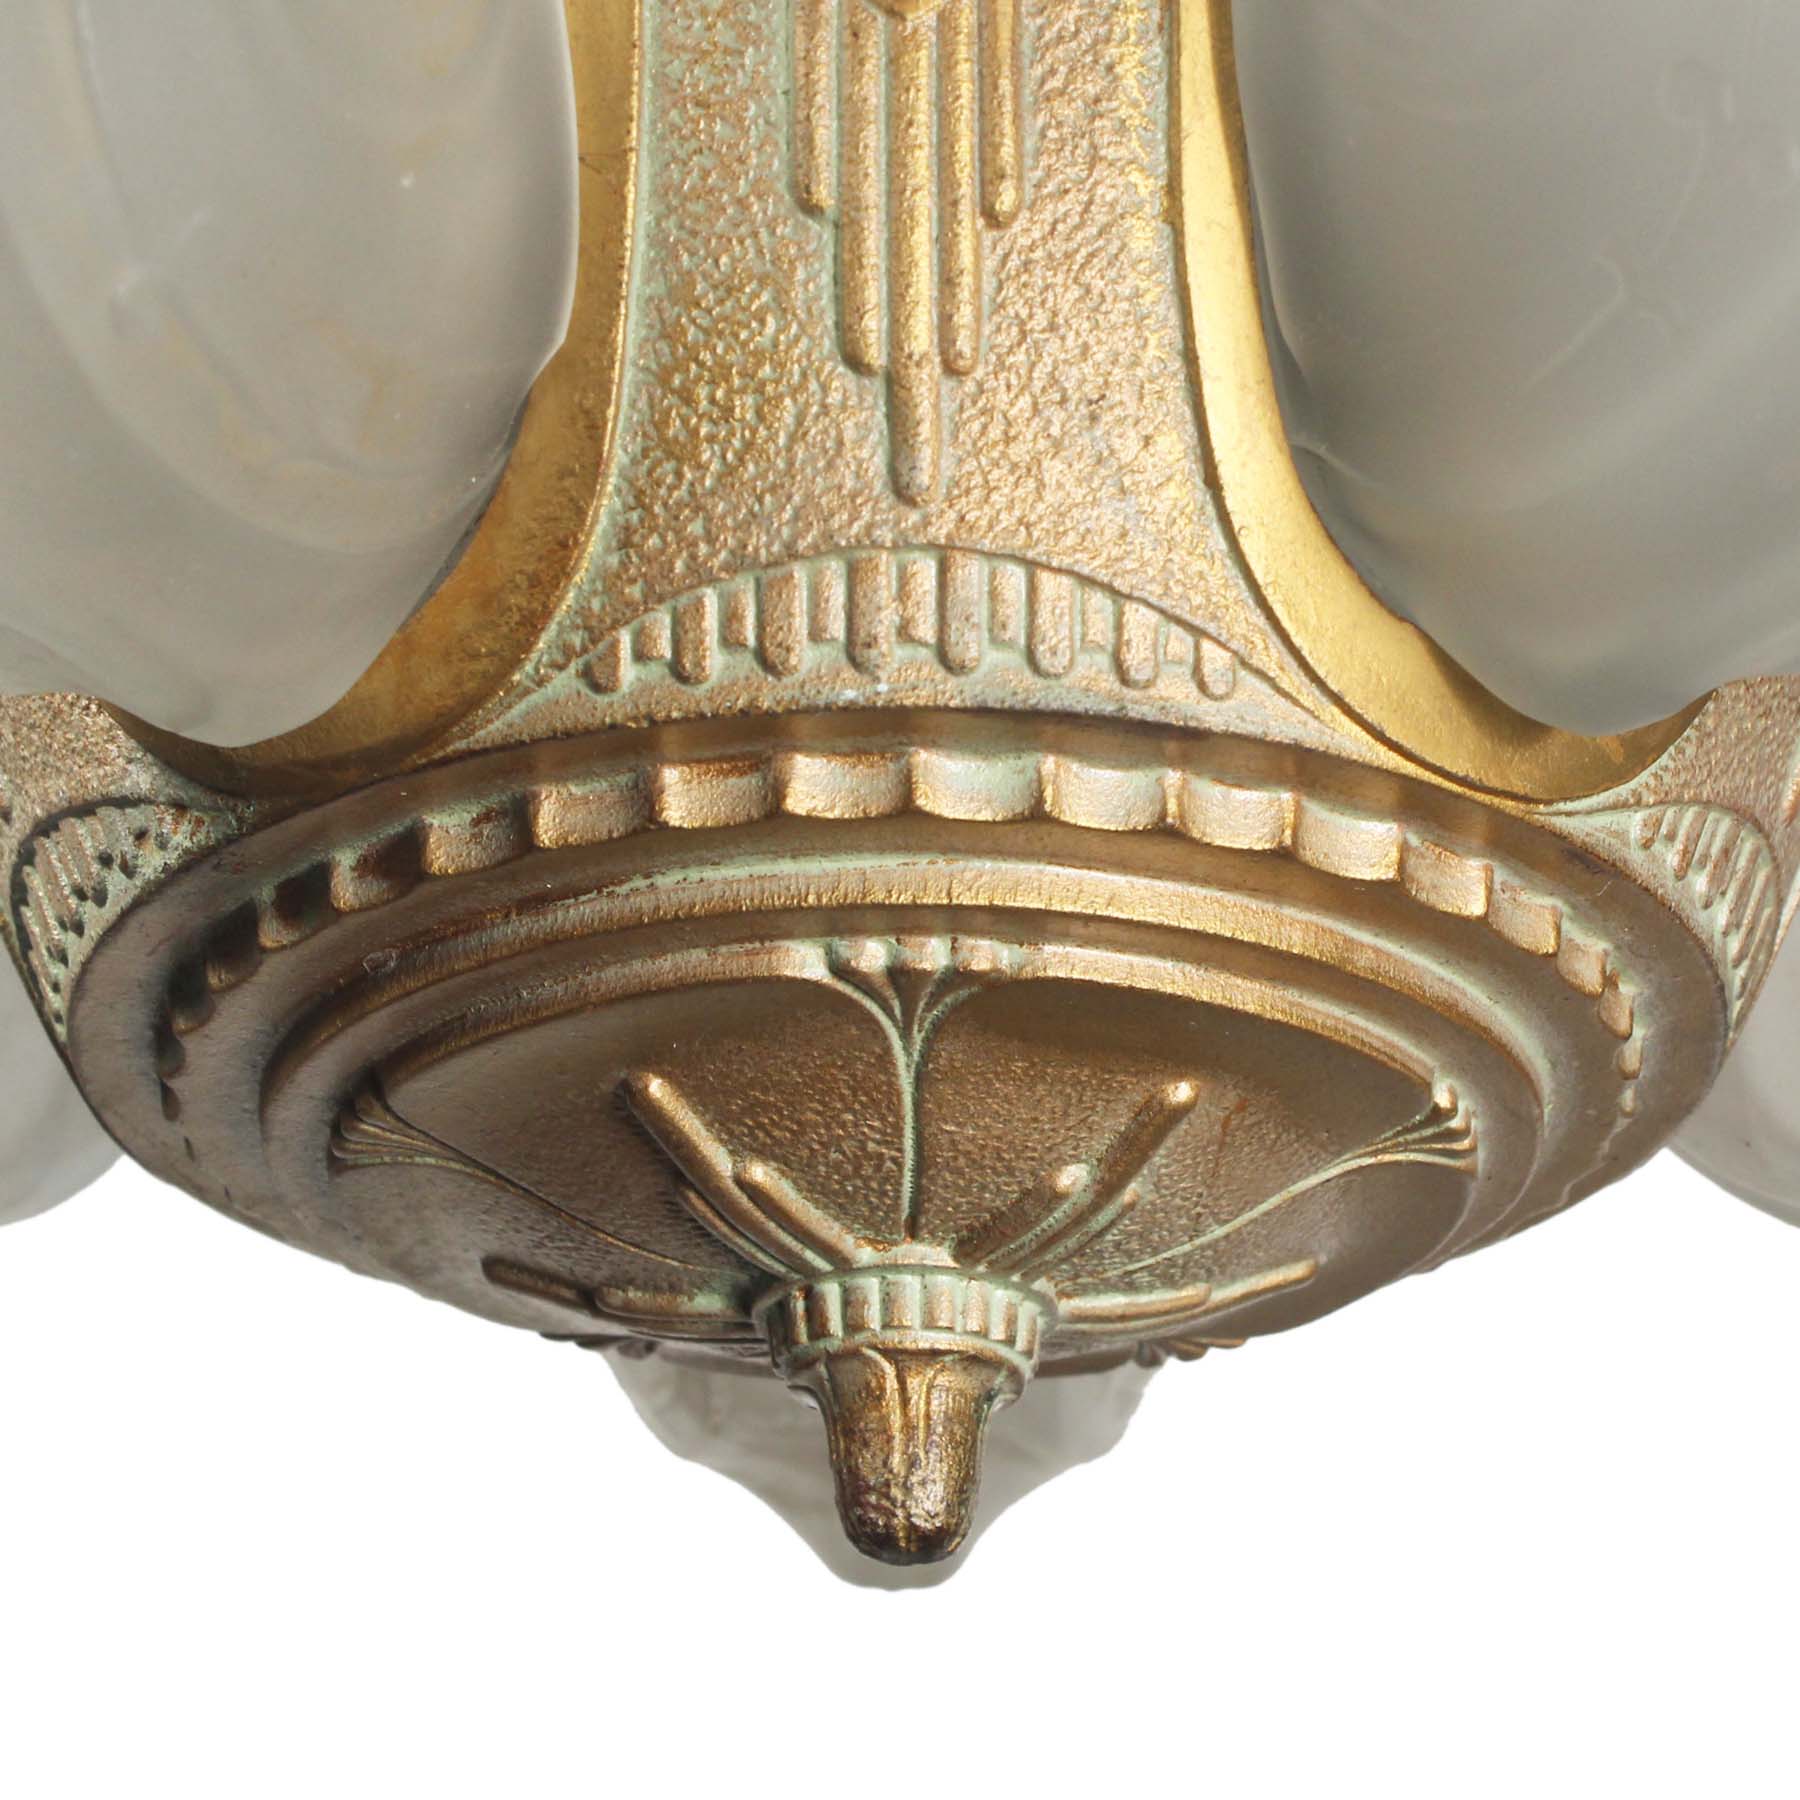 SOLD Antique Five-Light Art Deco Slip Shade Chandelier, "Warwick” Design by Glasco Electric-67734